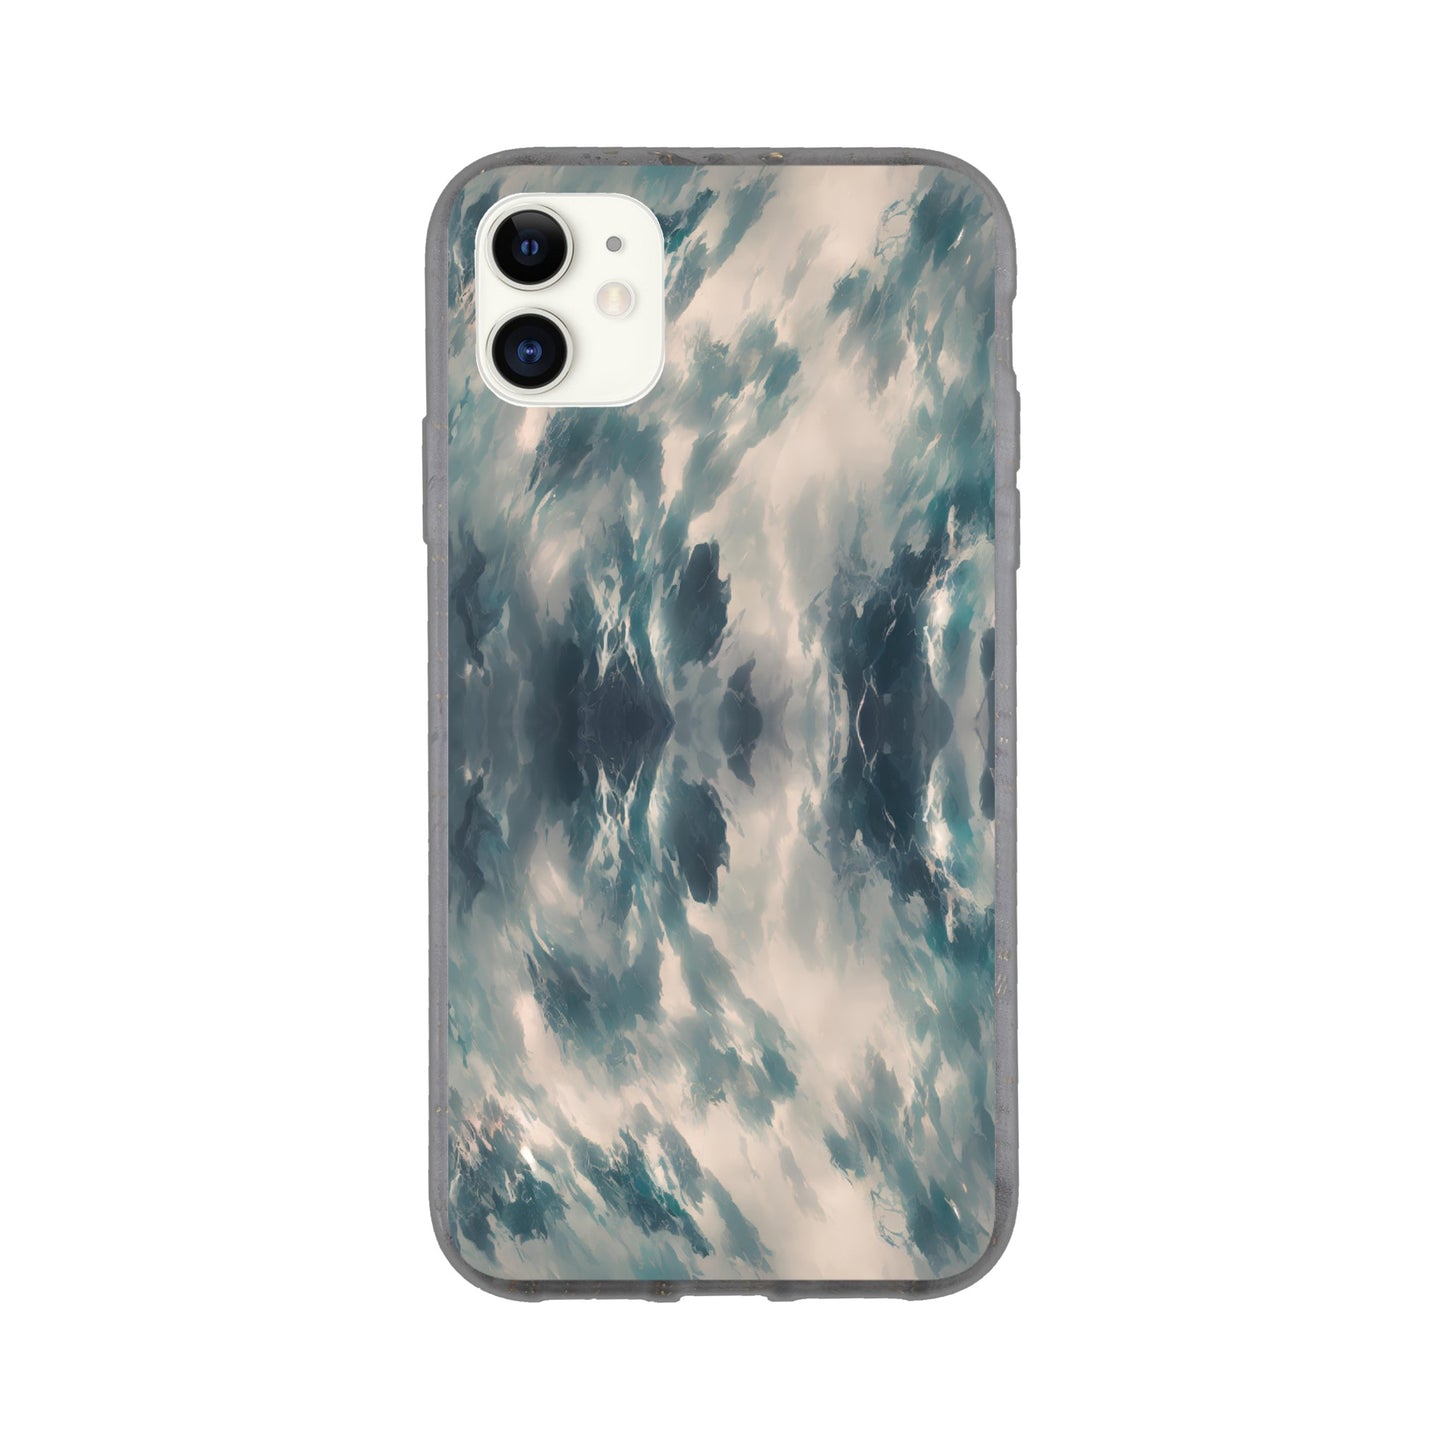 Cloudy Mountain : Bio iphone case